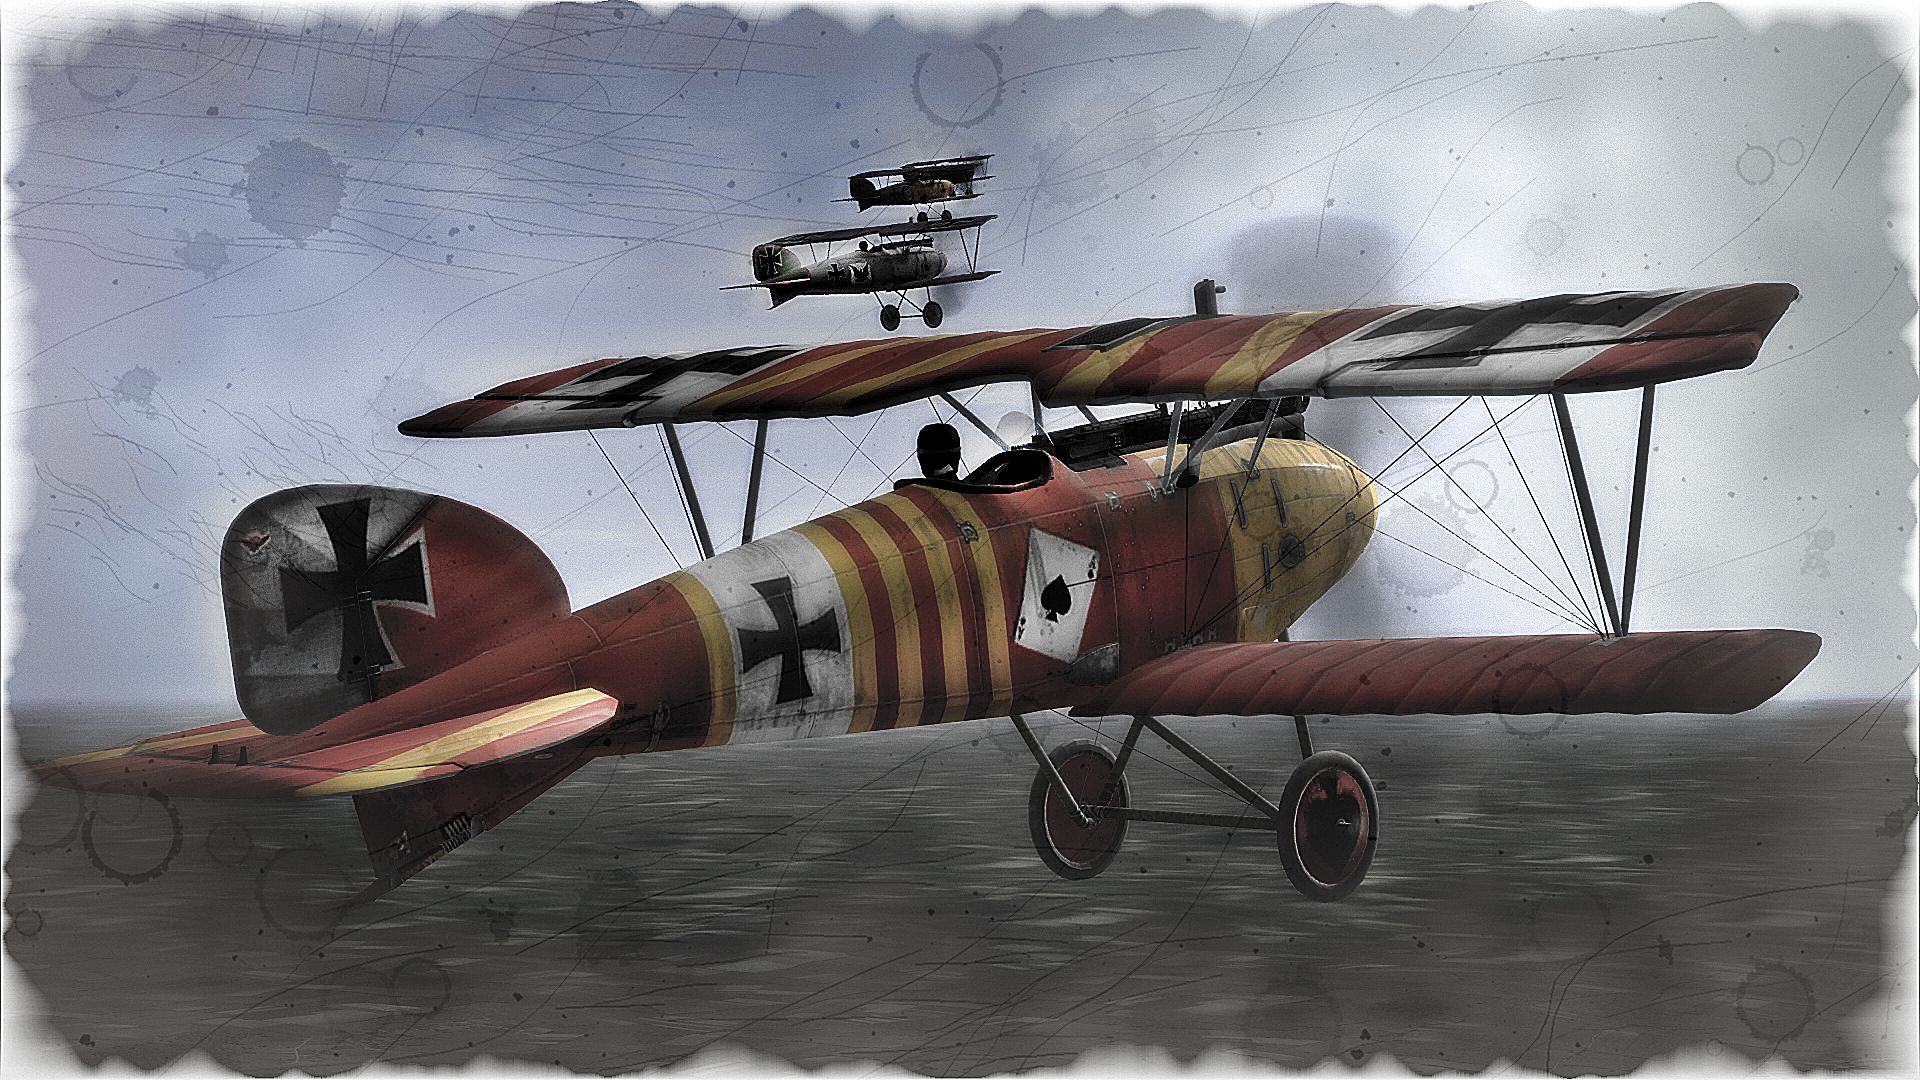 WWI aircraft wallpaper. Aircraft art, Ww1 aircraft, Aircraft